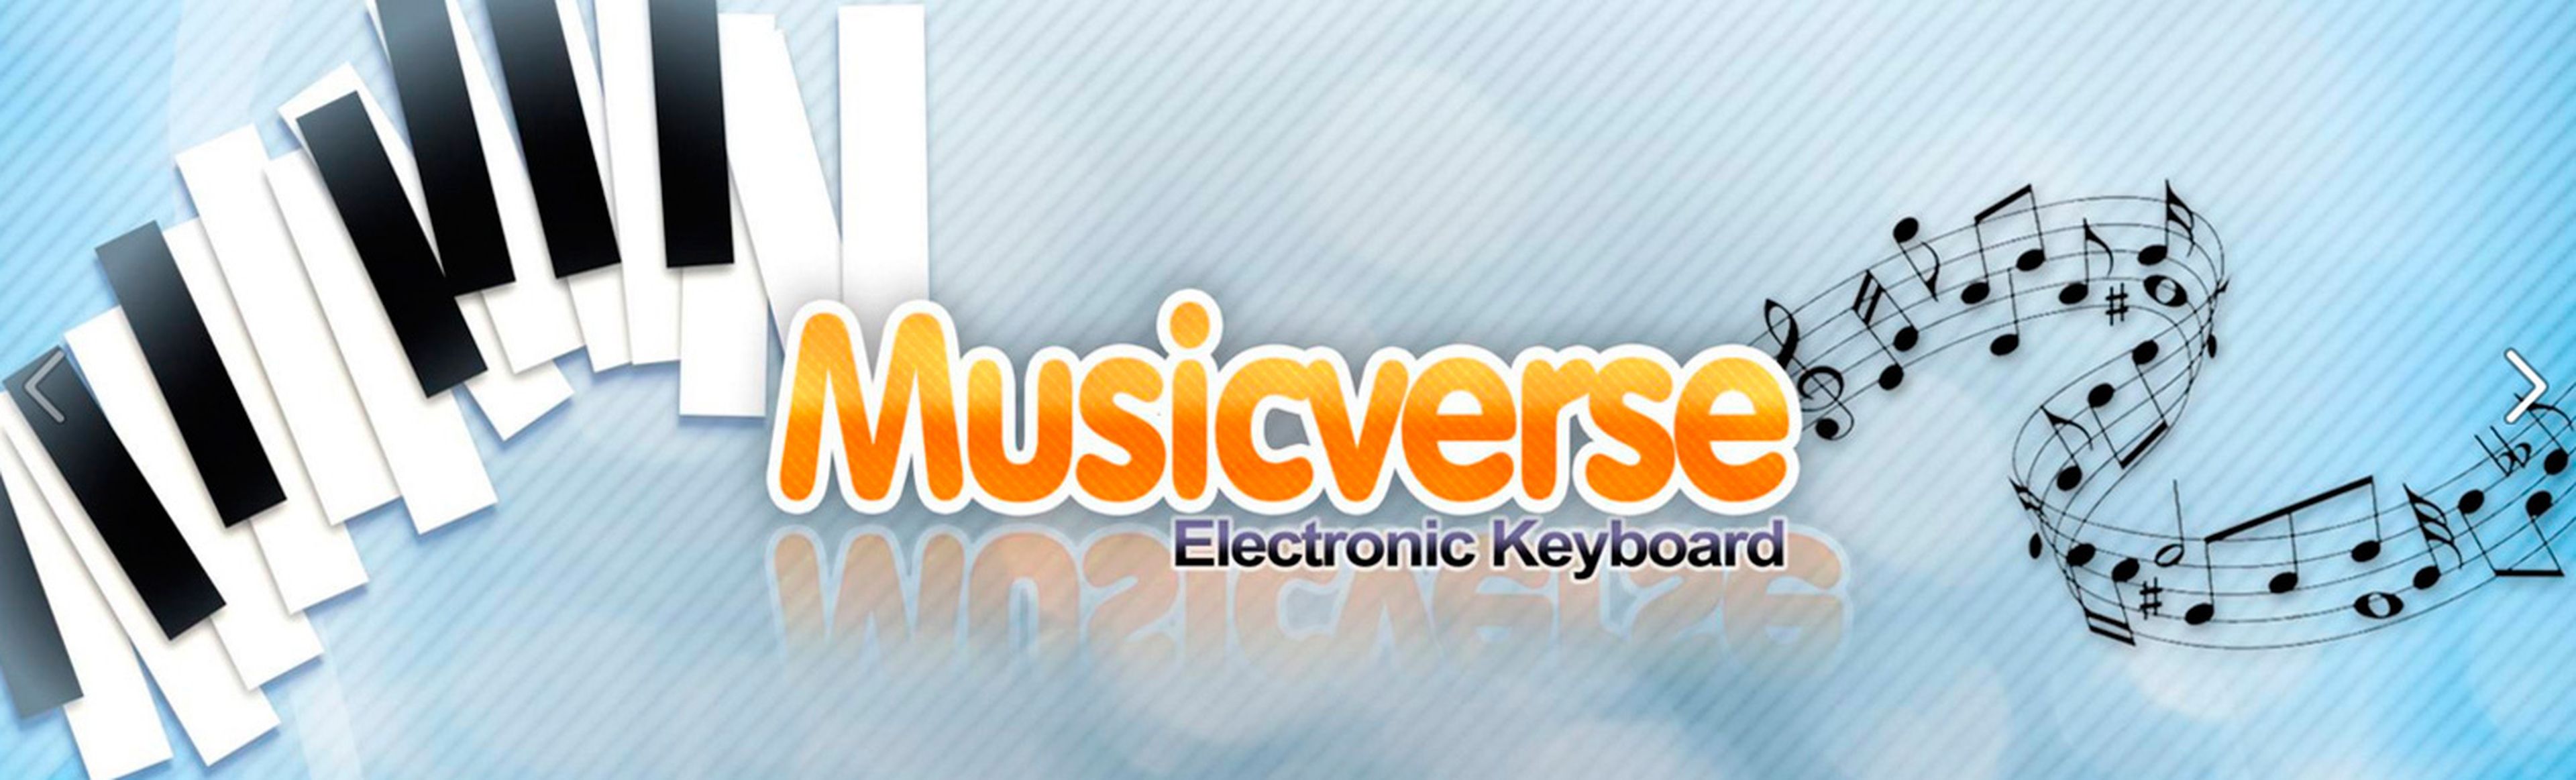 Musicverse Electronic Keyboard - 3DS